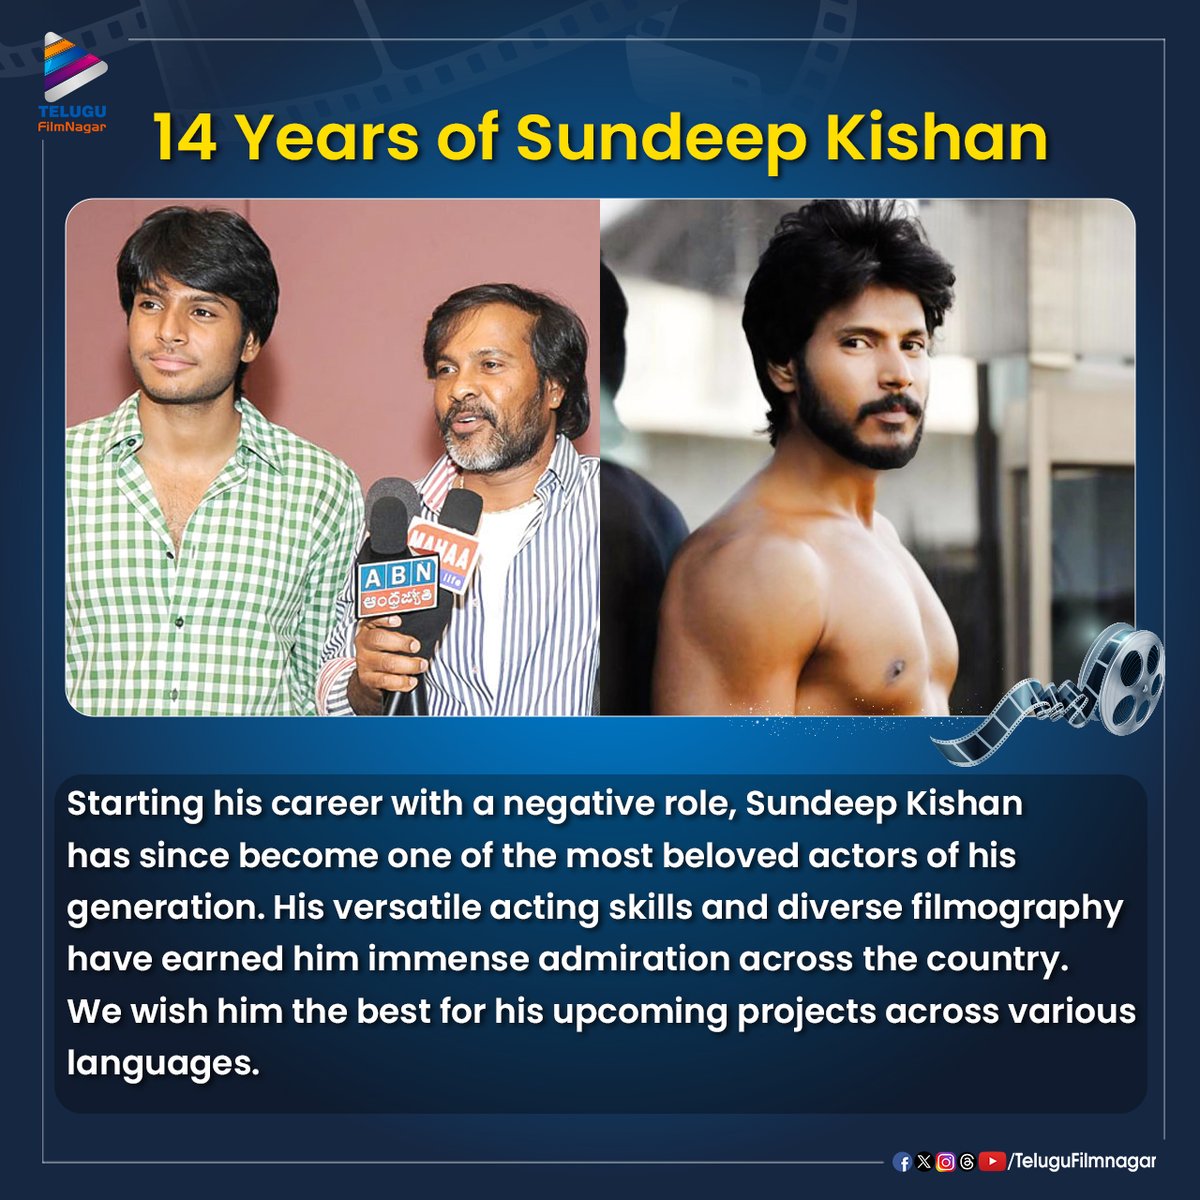 పద్నాలుగేళ్ల 'ప్రస్థానం'!🎉
Hearty Congratulations to Talented Actor @sundeepkishan on completing 14 years in the film industry!❤️‍🔥 Here's to many more years of success & achievements!✨

#14YearsofSundeepKishan #14YearsForPrasthanam 
#SundeepKishan #Raayan #TeluguFilmNagar